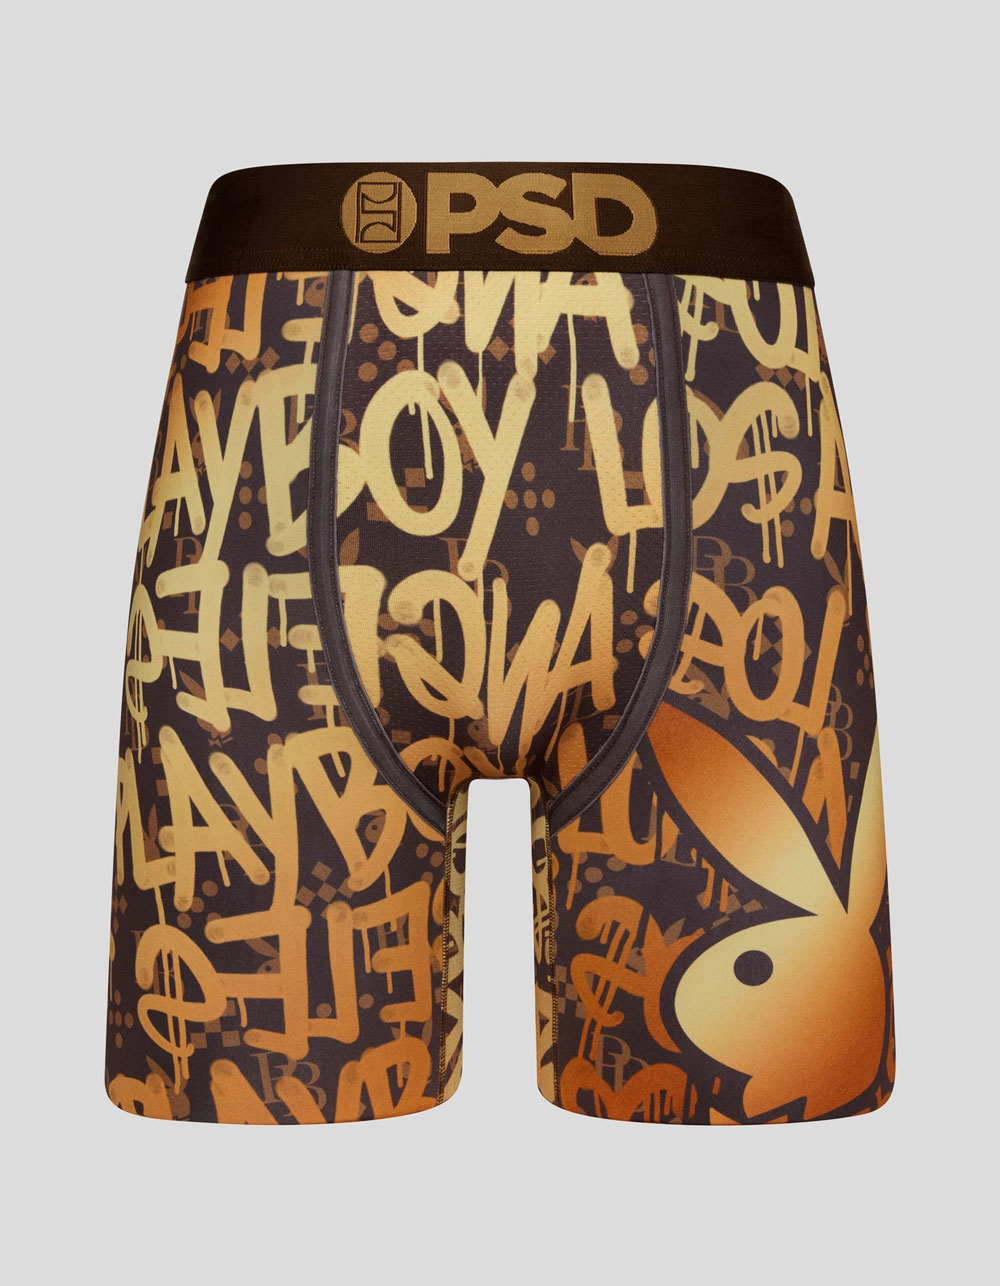 PSD Underwear Playboy Cover Girls Boxer Briefs Quality Sports No